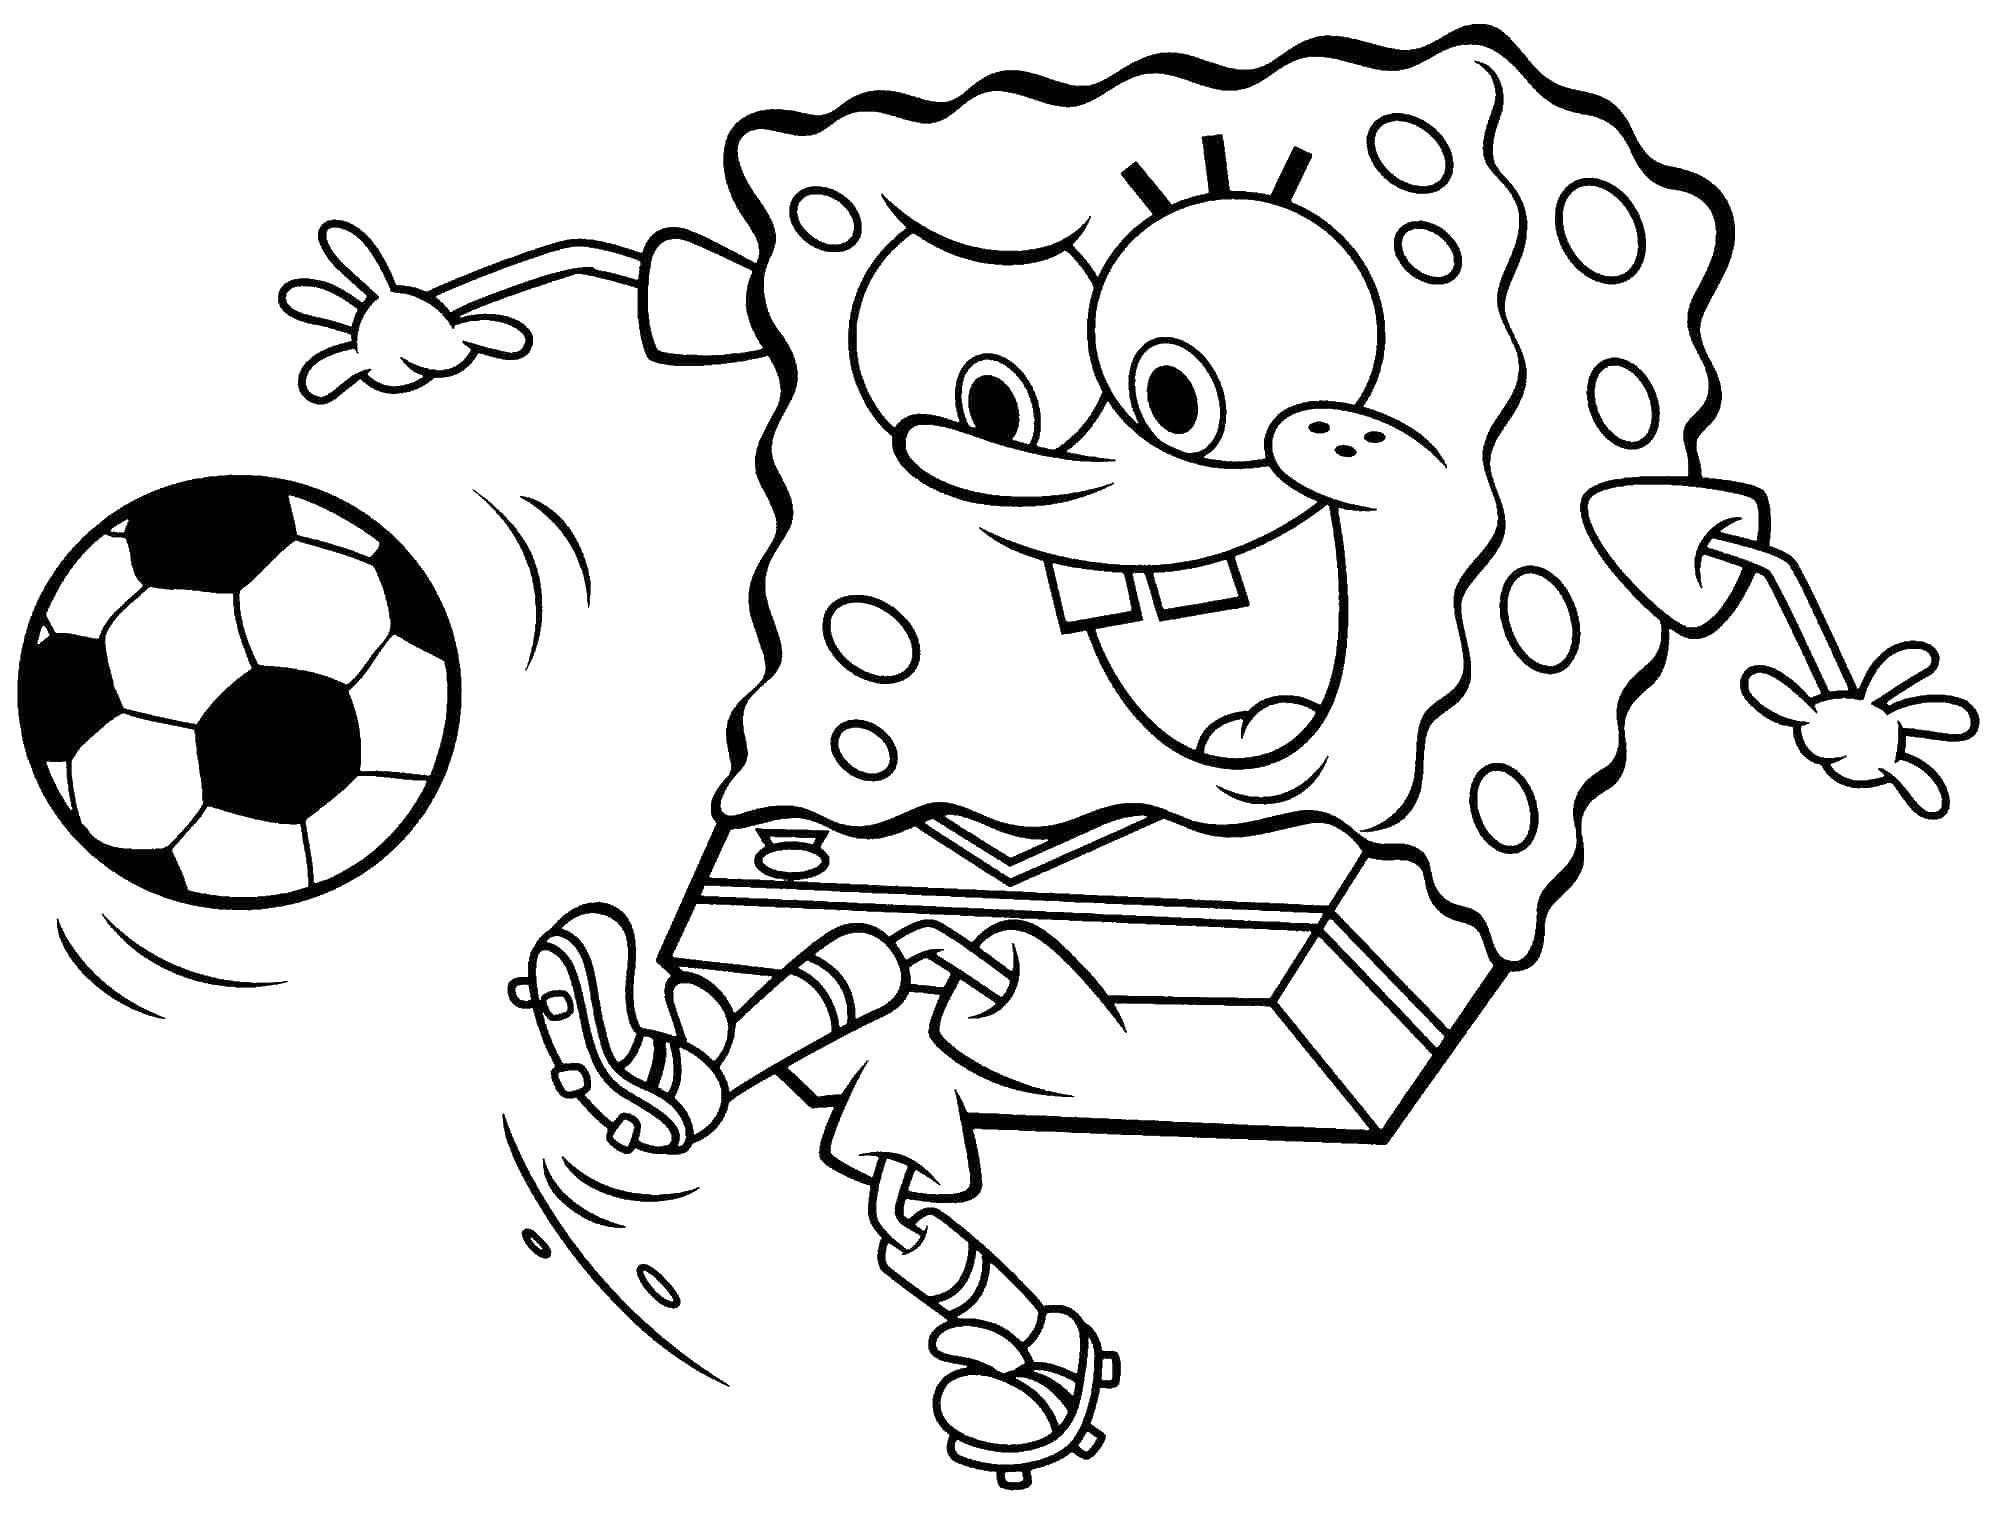 Название: Раскраска Спанч боб с мячом. Категория: Спанч Боб. Теги: Спанч Боб, спорт, футбол.